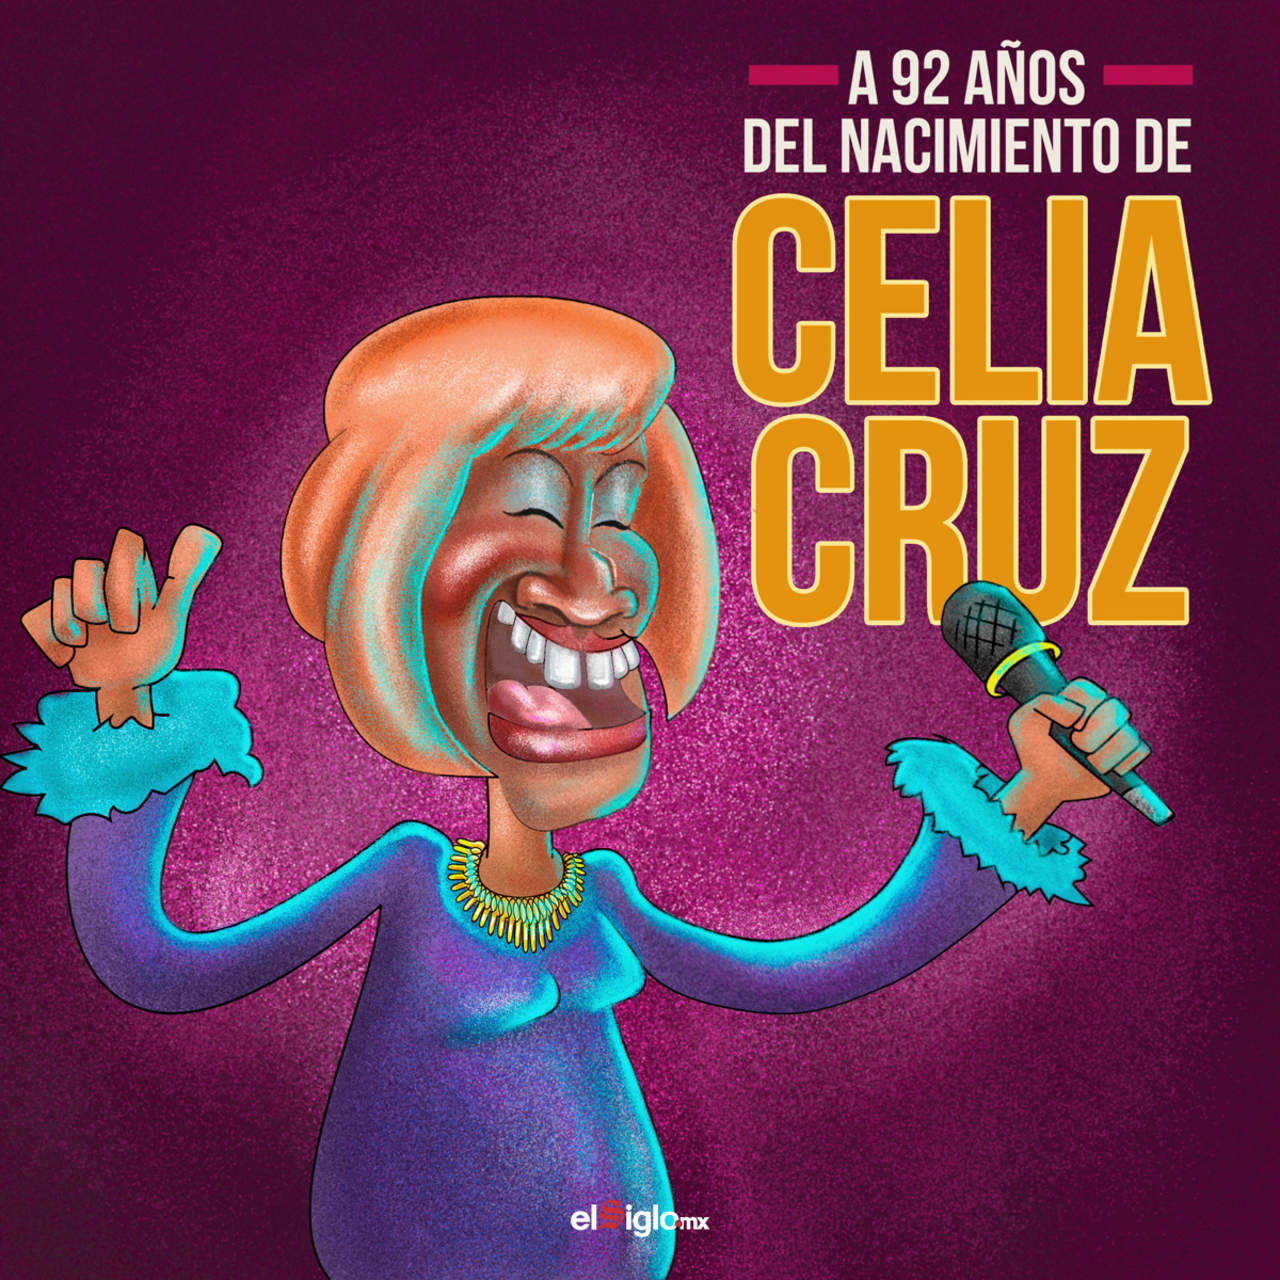 1925: Nace Celia Cruz, cantante cubana famosa internacionalmente